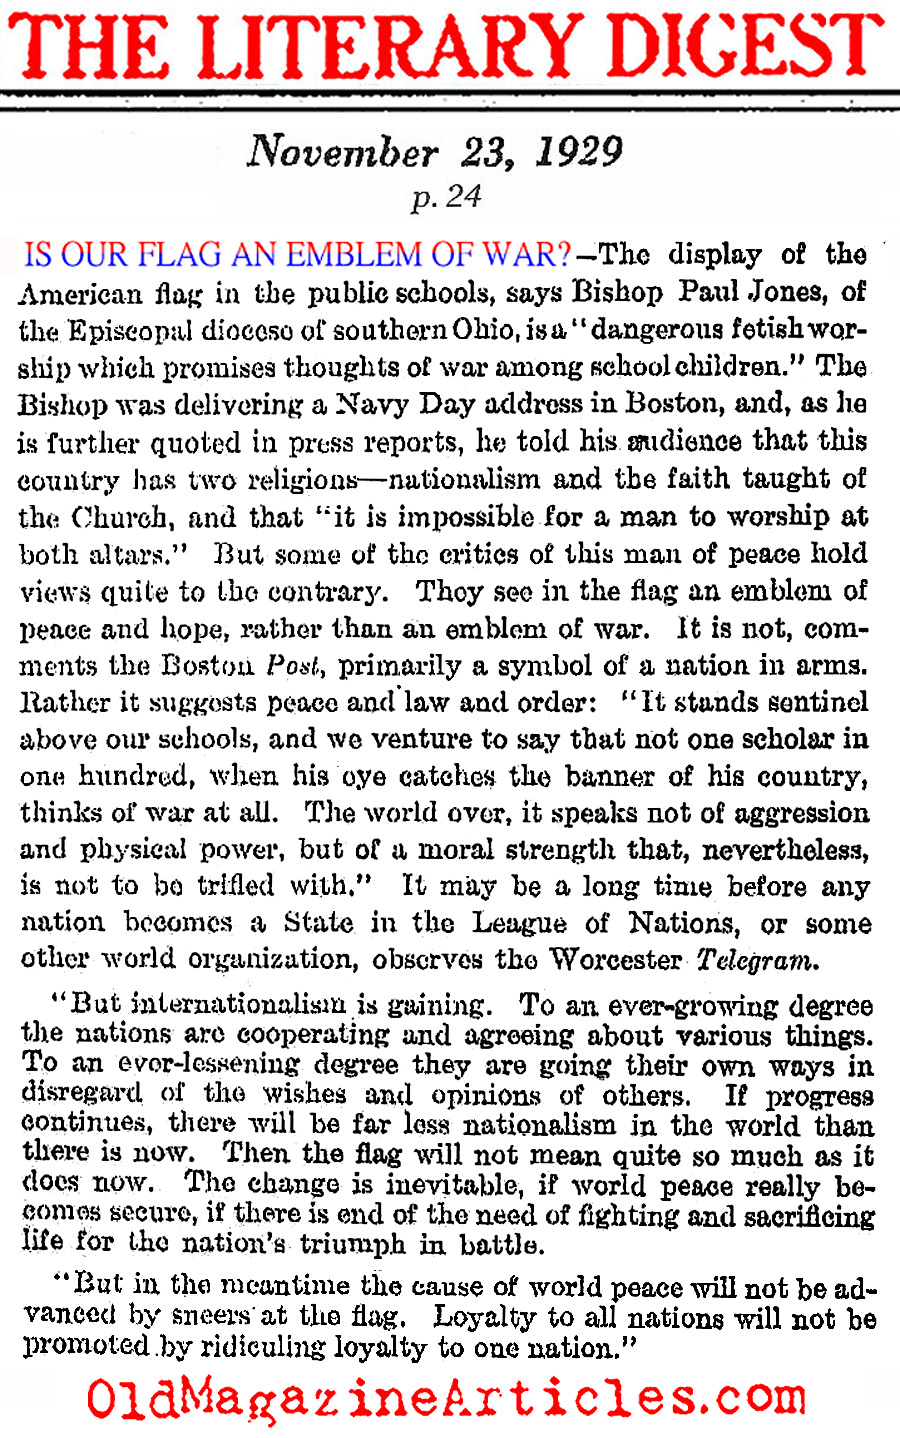 Schools Should Not Fly ''An Emblem Of War'' (Literary Digest, 1929)